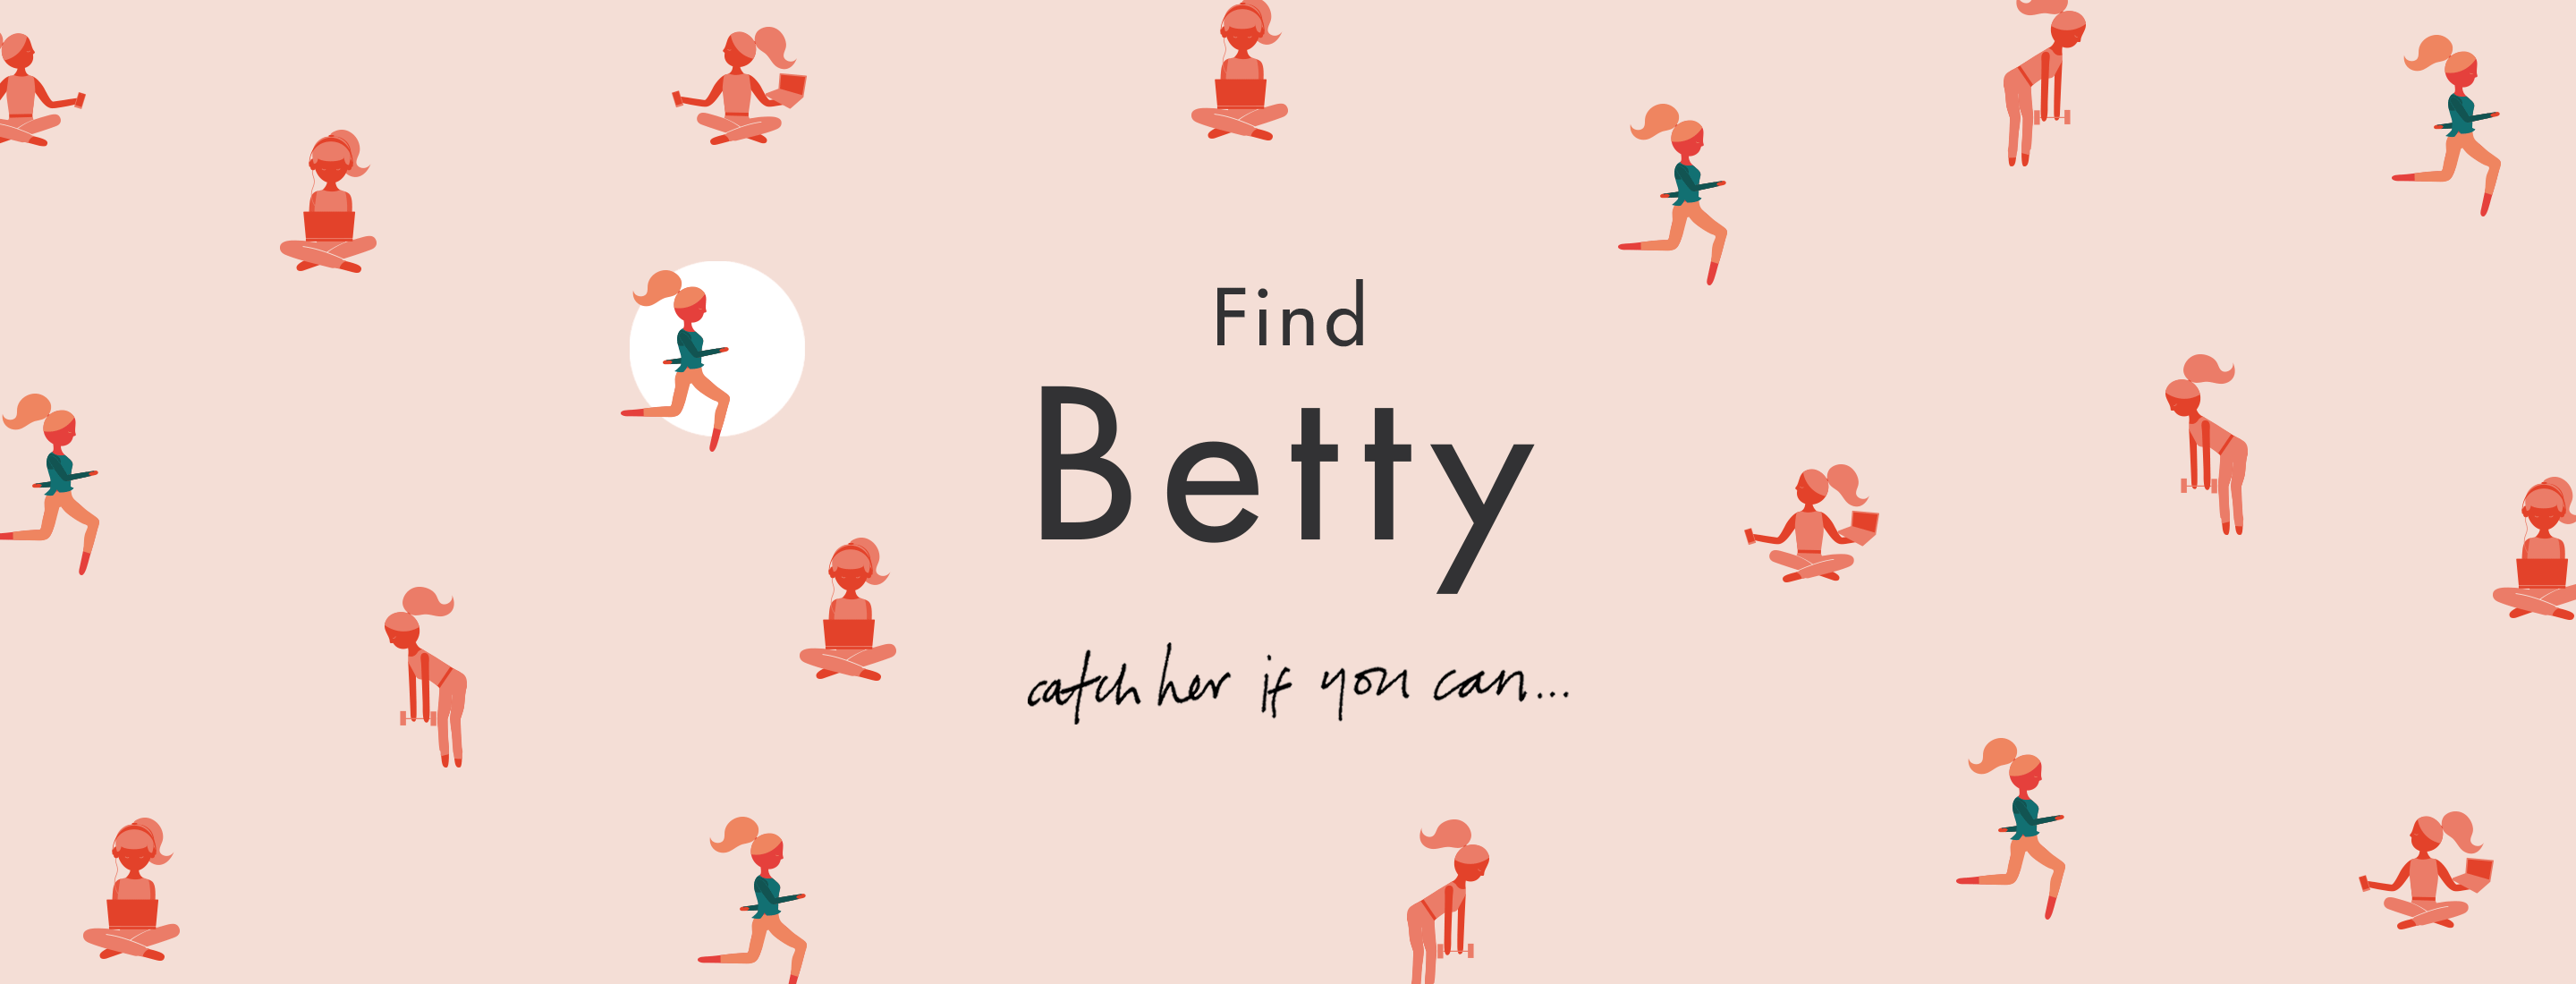 Find Betty.